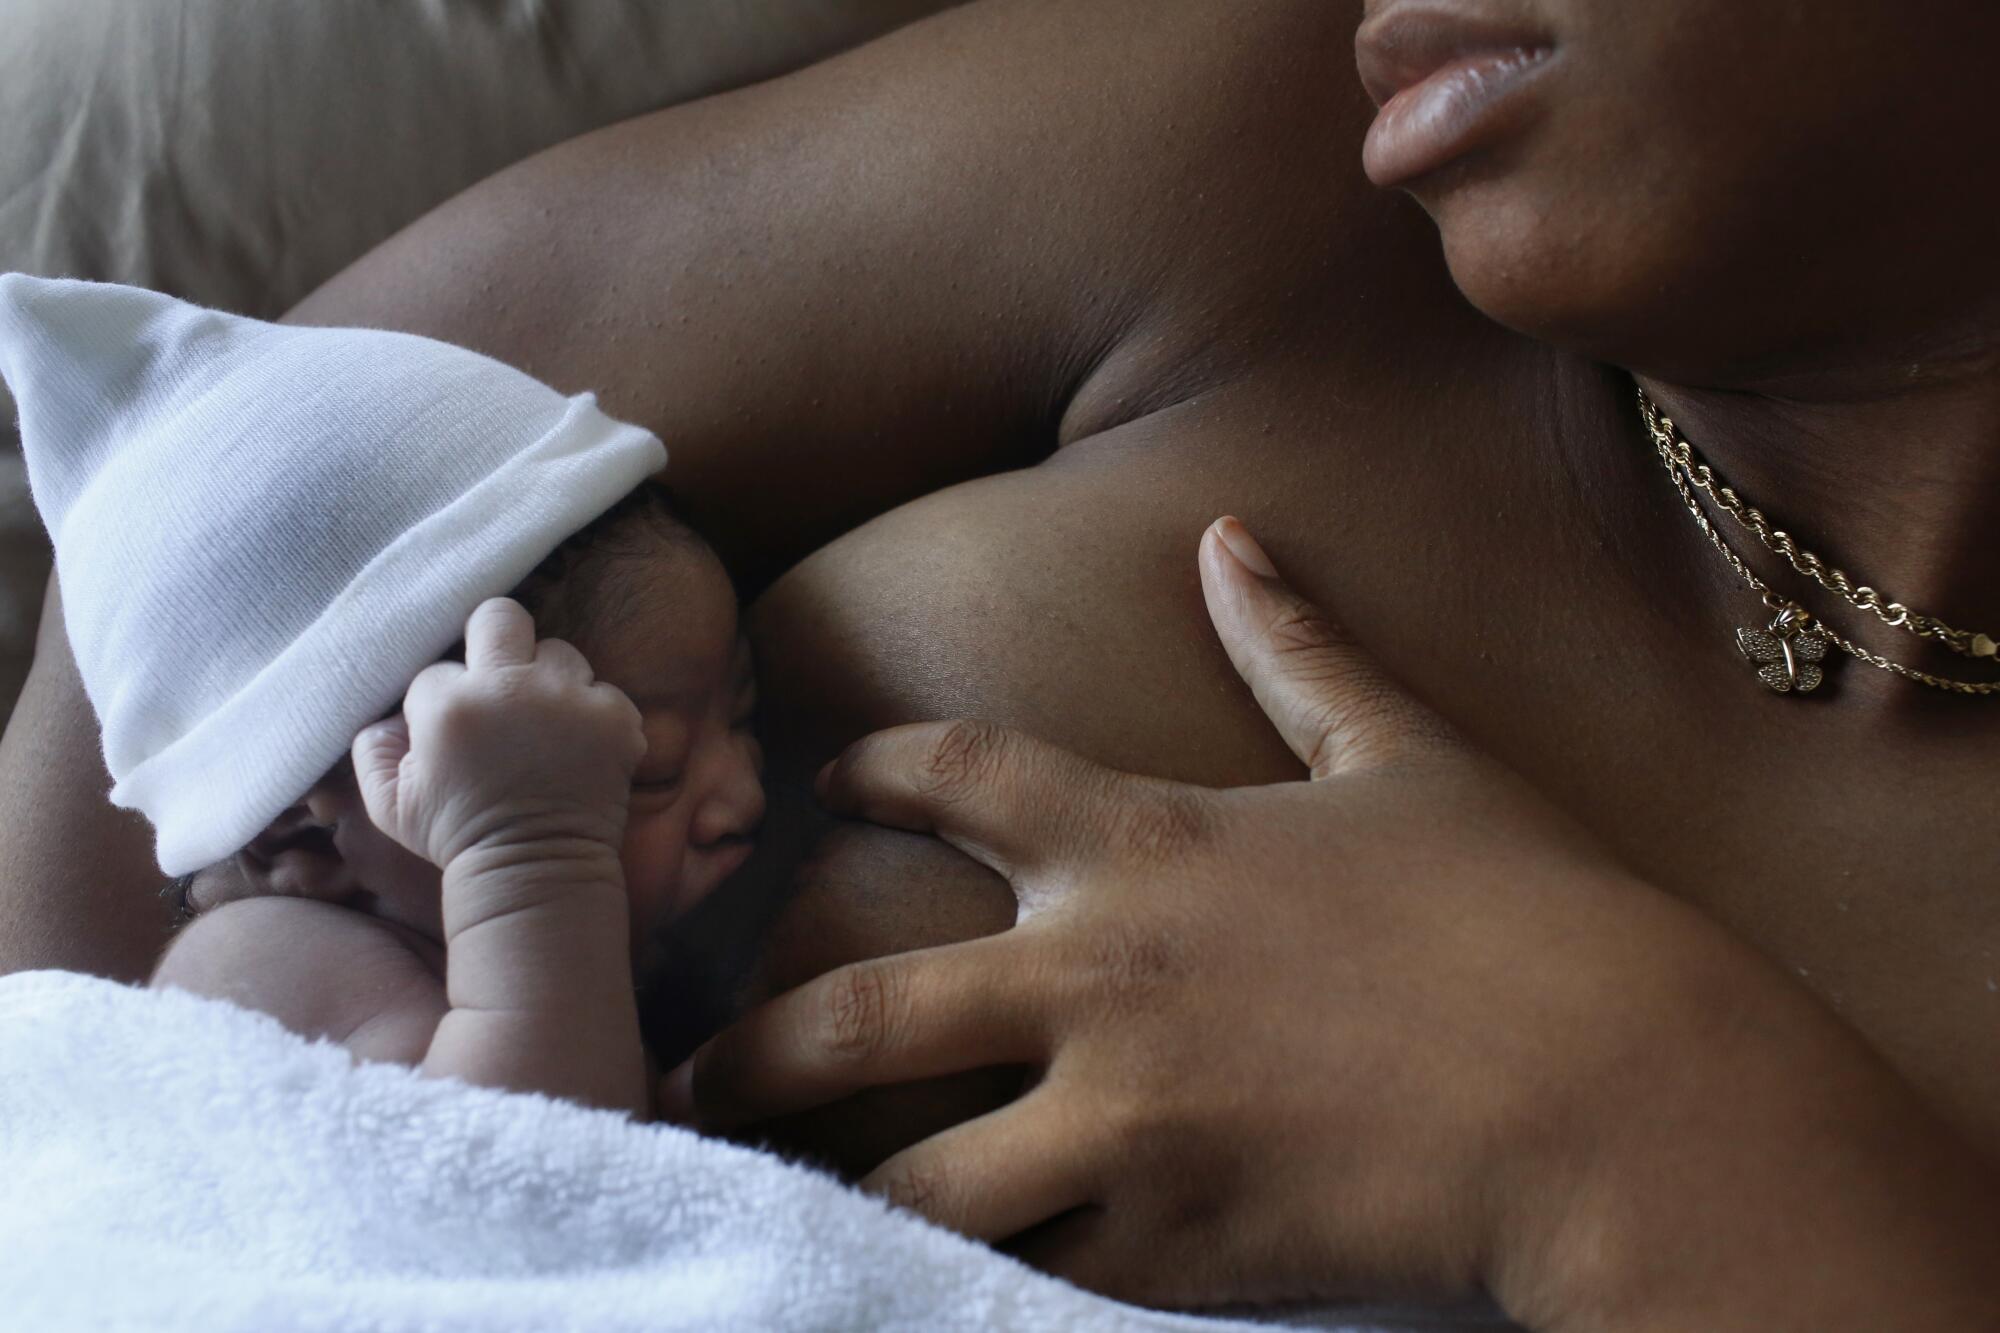 A woman breast-feeds her newborn